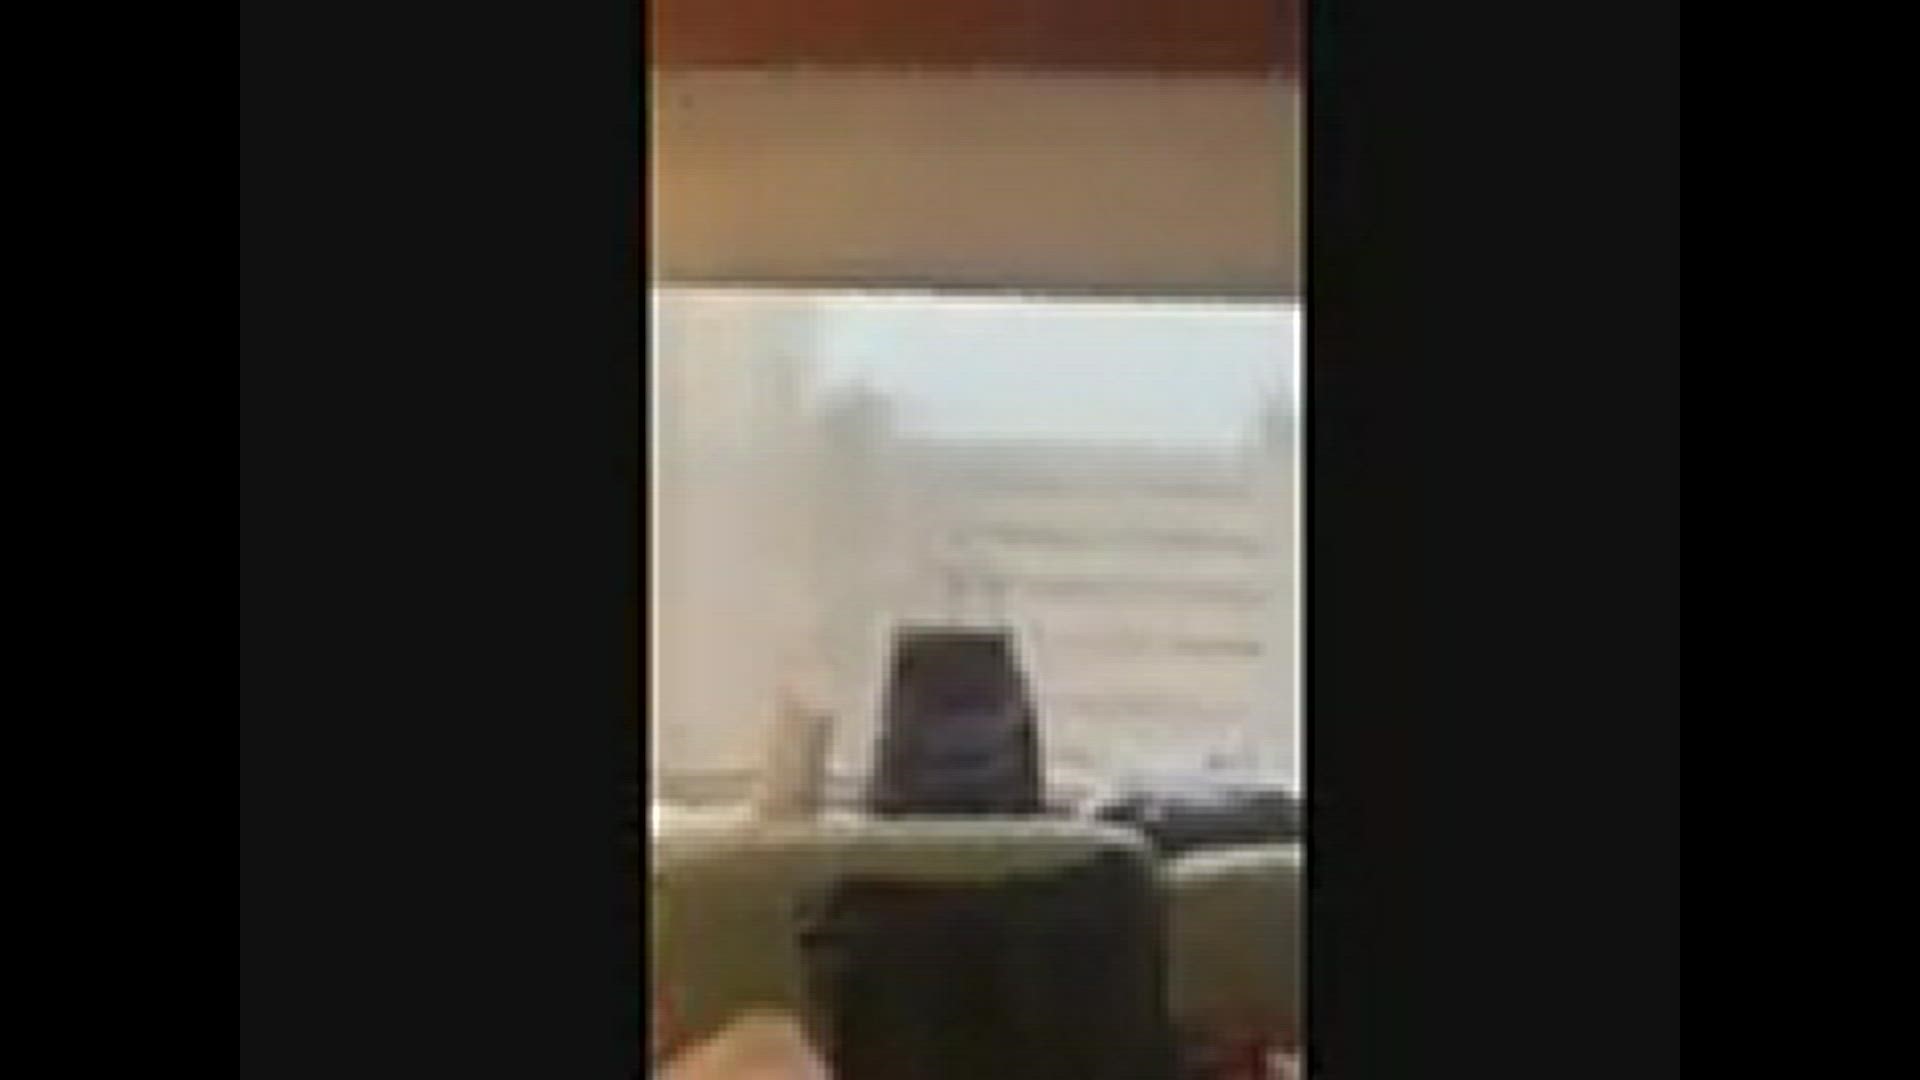 Video shows Hurricane Ida damaging Ochsner Medical Center on Jefferson Highway in New Orleans.
Credit: Cara Castille